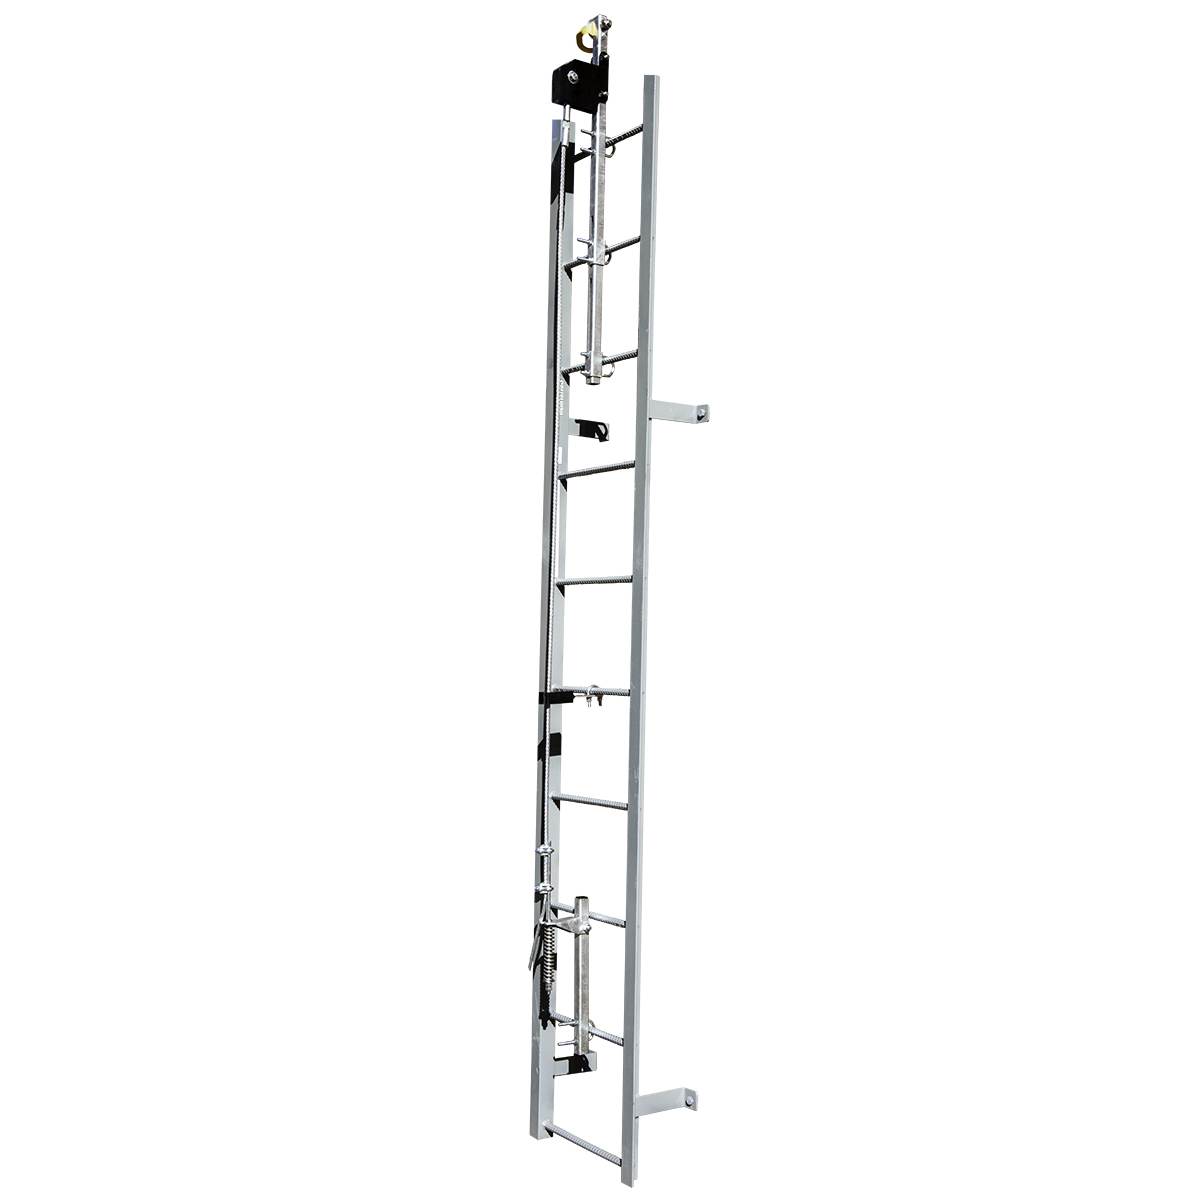 SafeWaze 50' VLL Cable Ladder System, 4-person Complete Kit